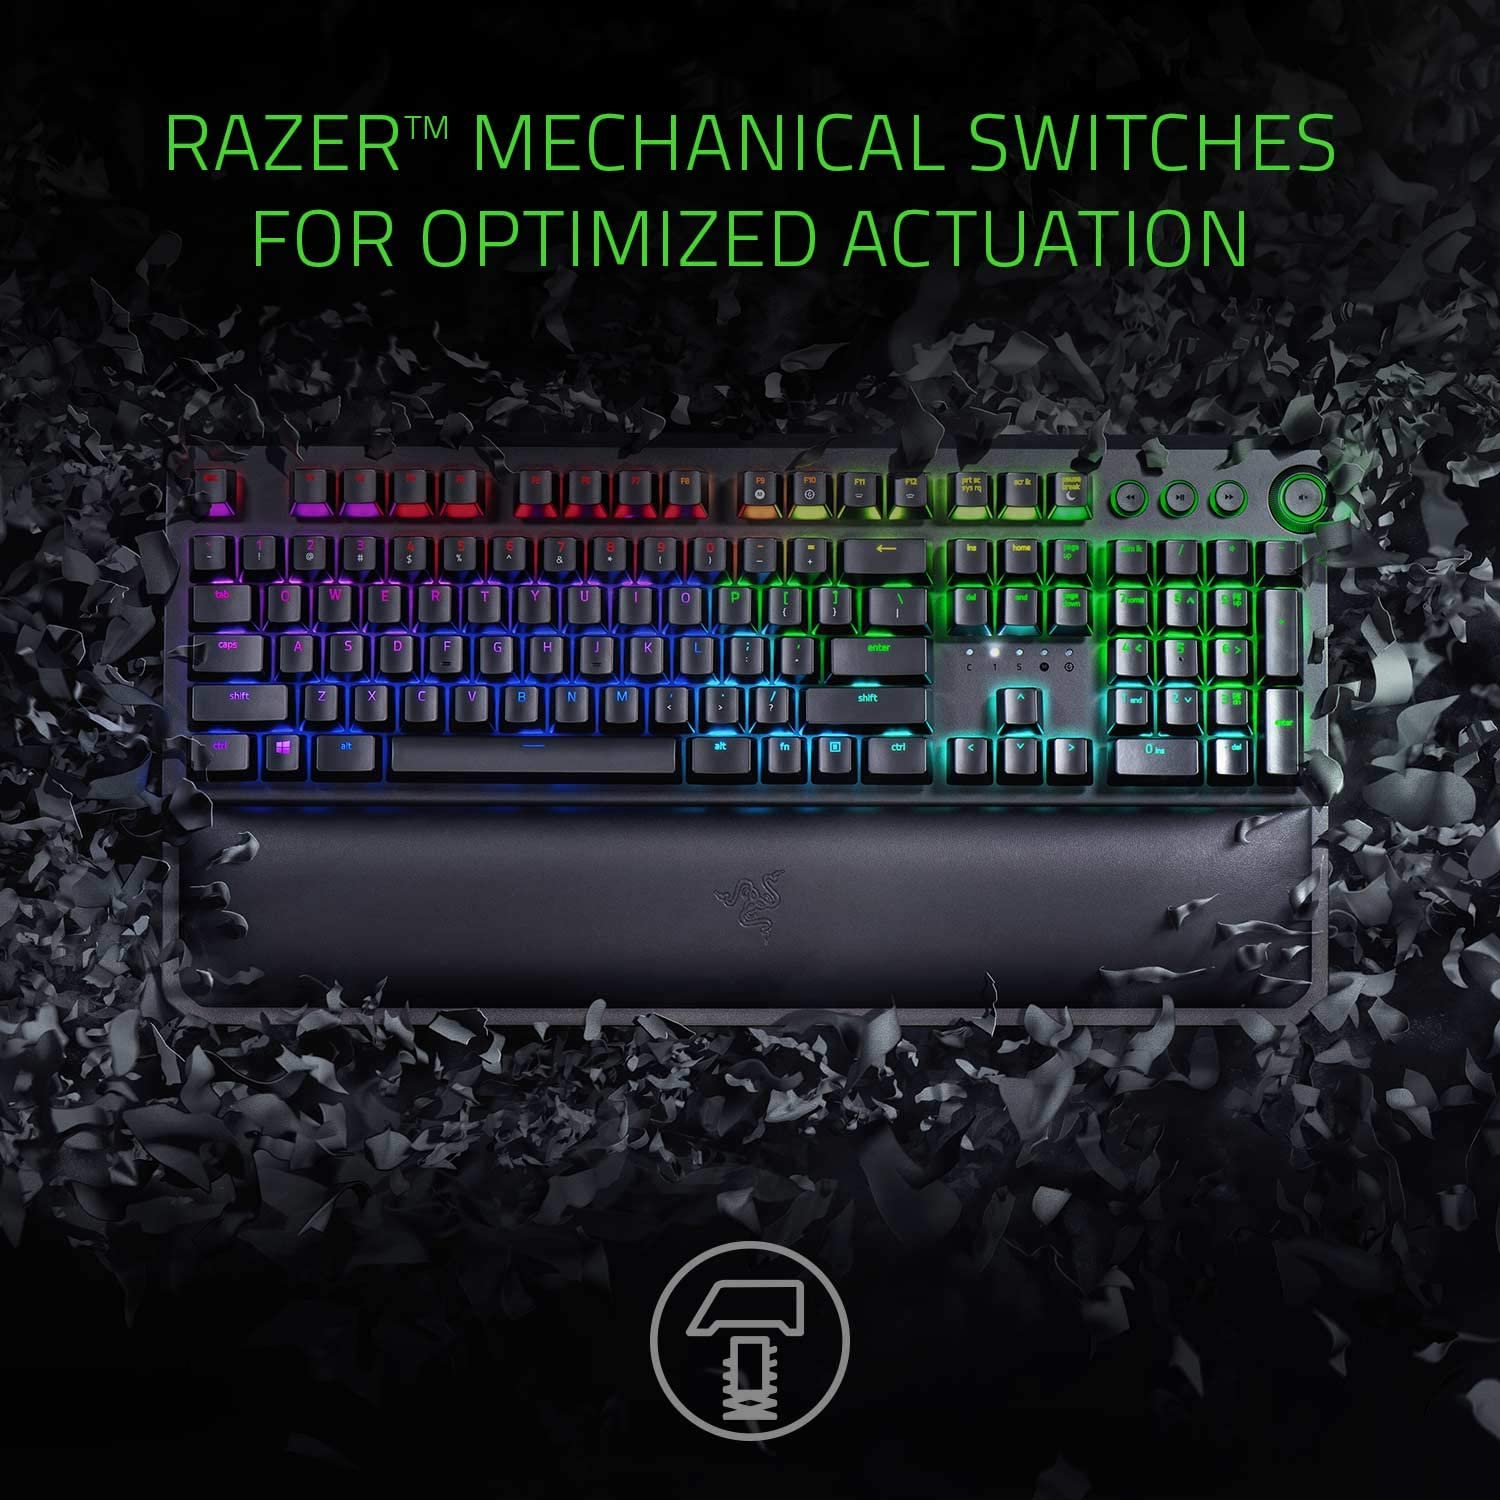  Razer BlackWidow Mechanical Gaming Keyboard: Green